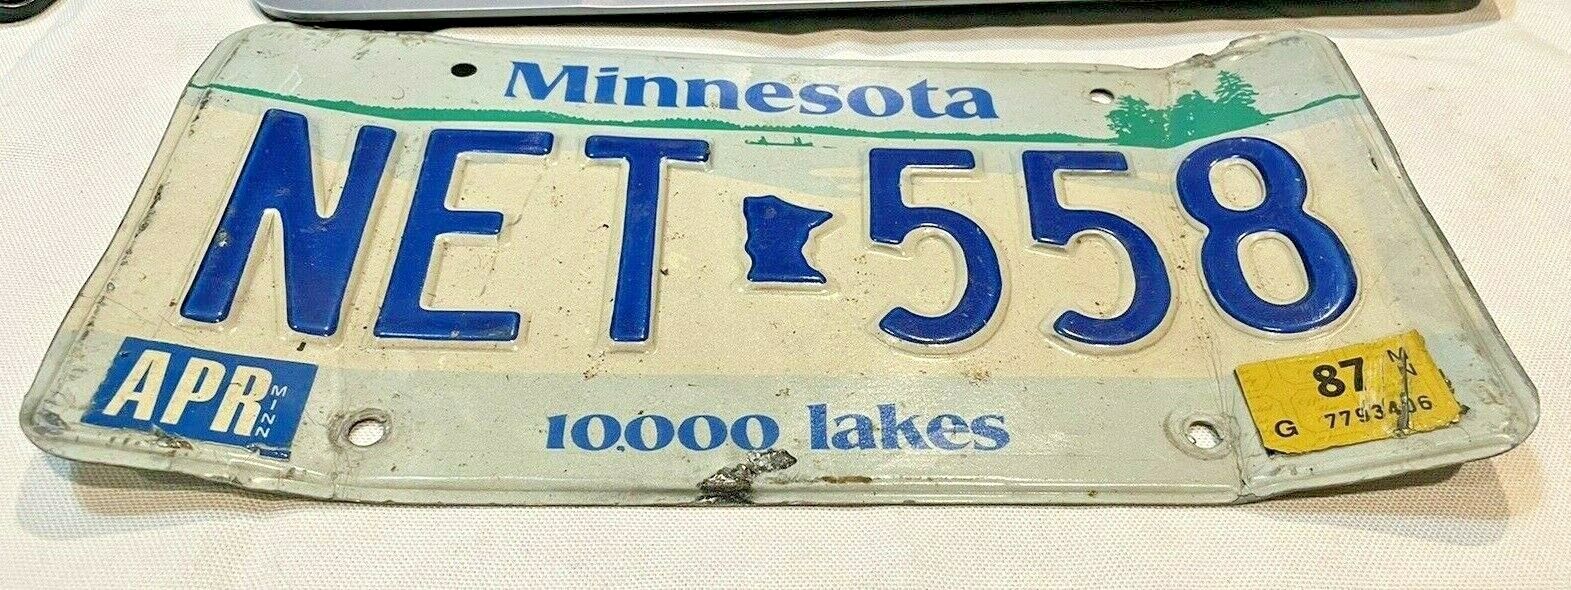 Minnesota License Plate #NET-558- ISSUE DATE 1987